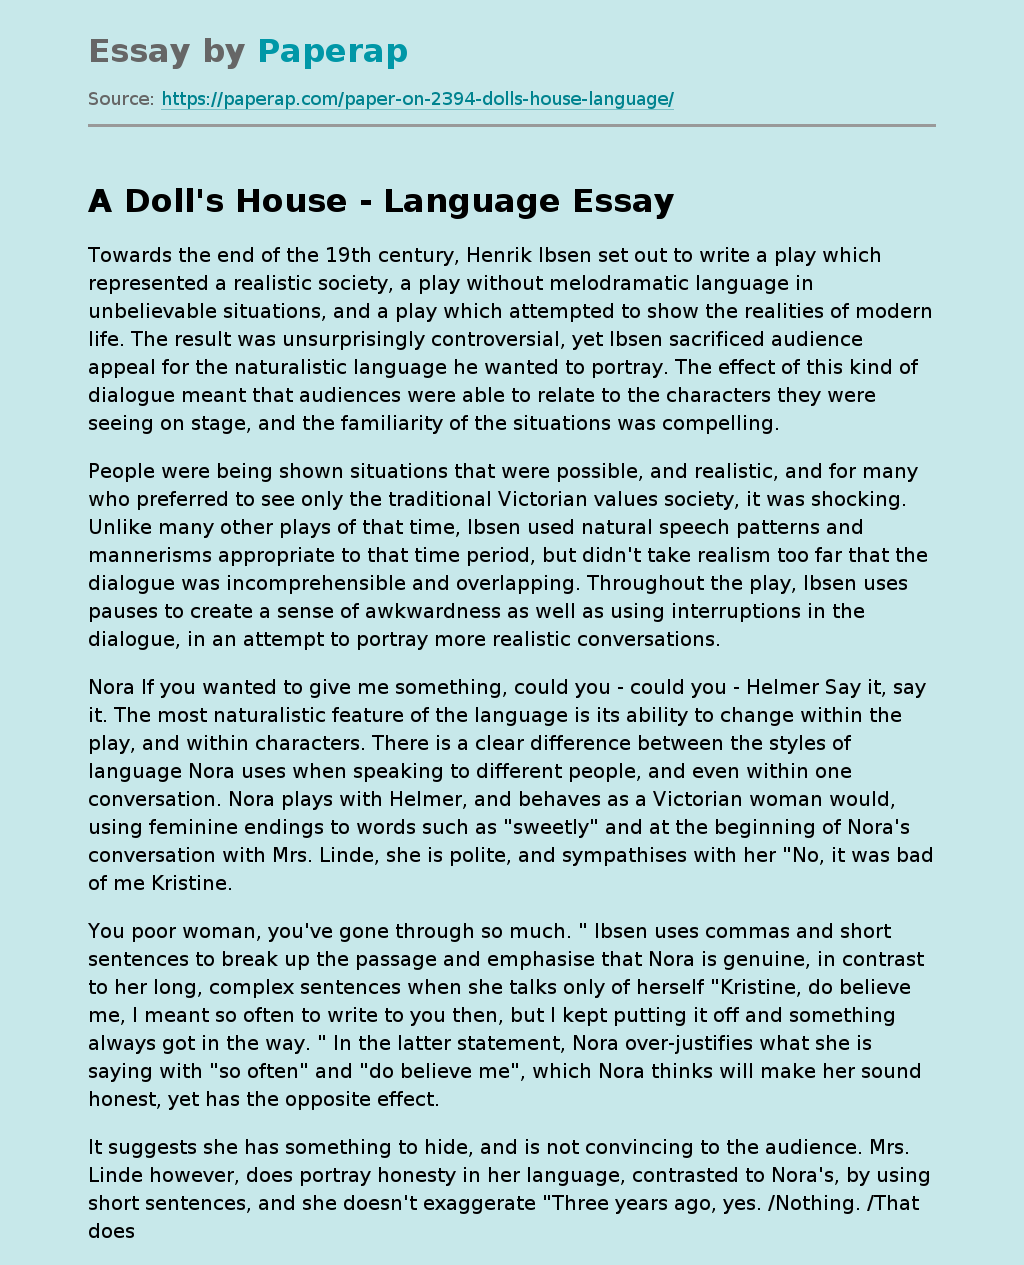 A Doll's House - Language